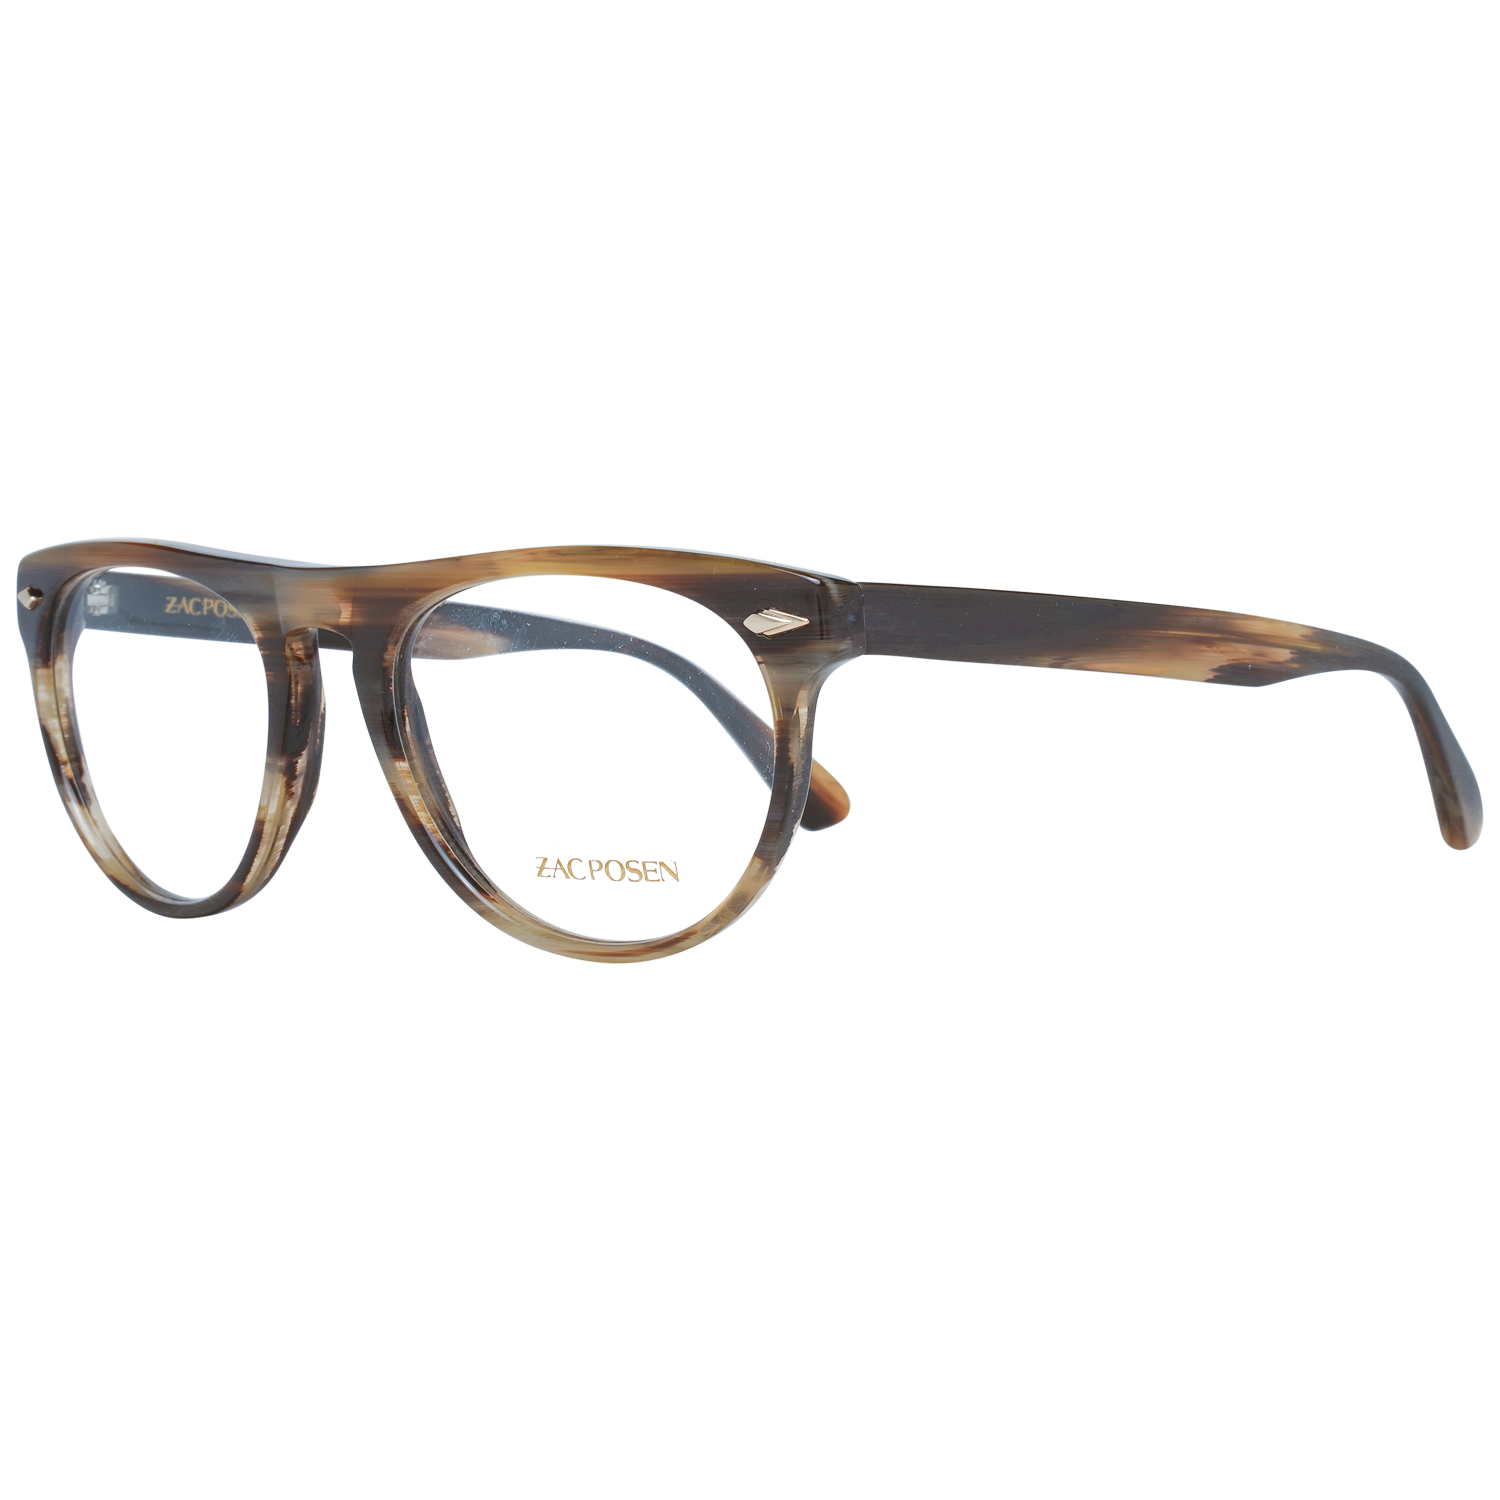 Zac Posen Frames Zac Posen Optical Frame ZIDE BR 53 Idealist Eyeglasses Eyewear UK USA Australia 